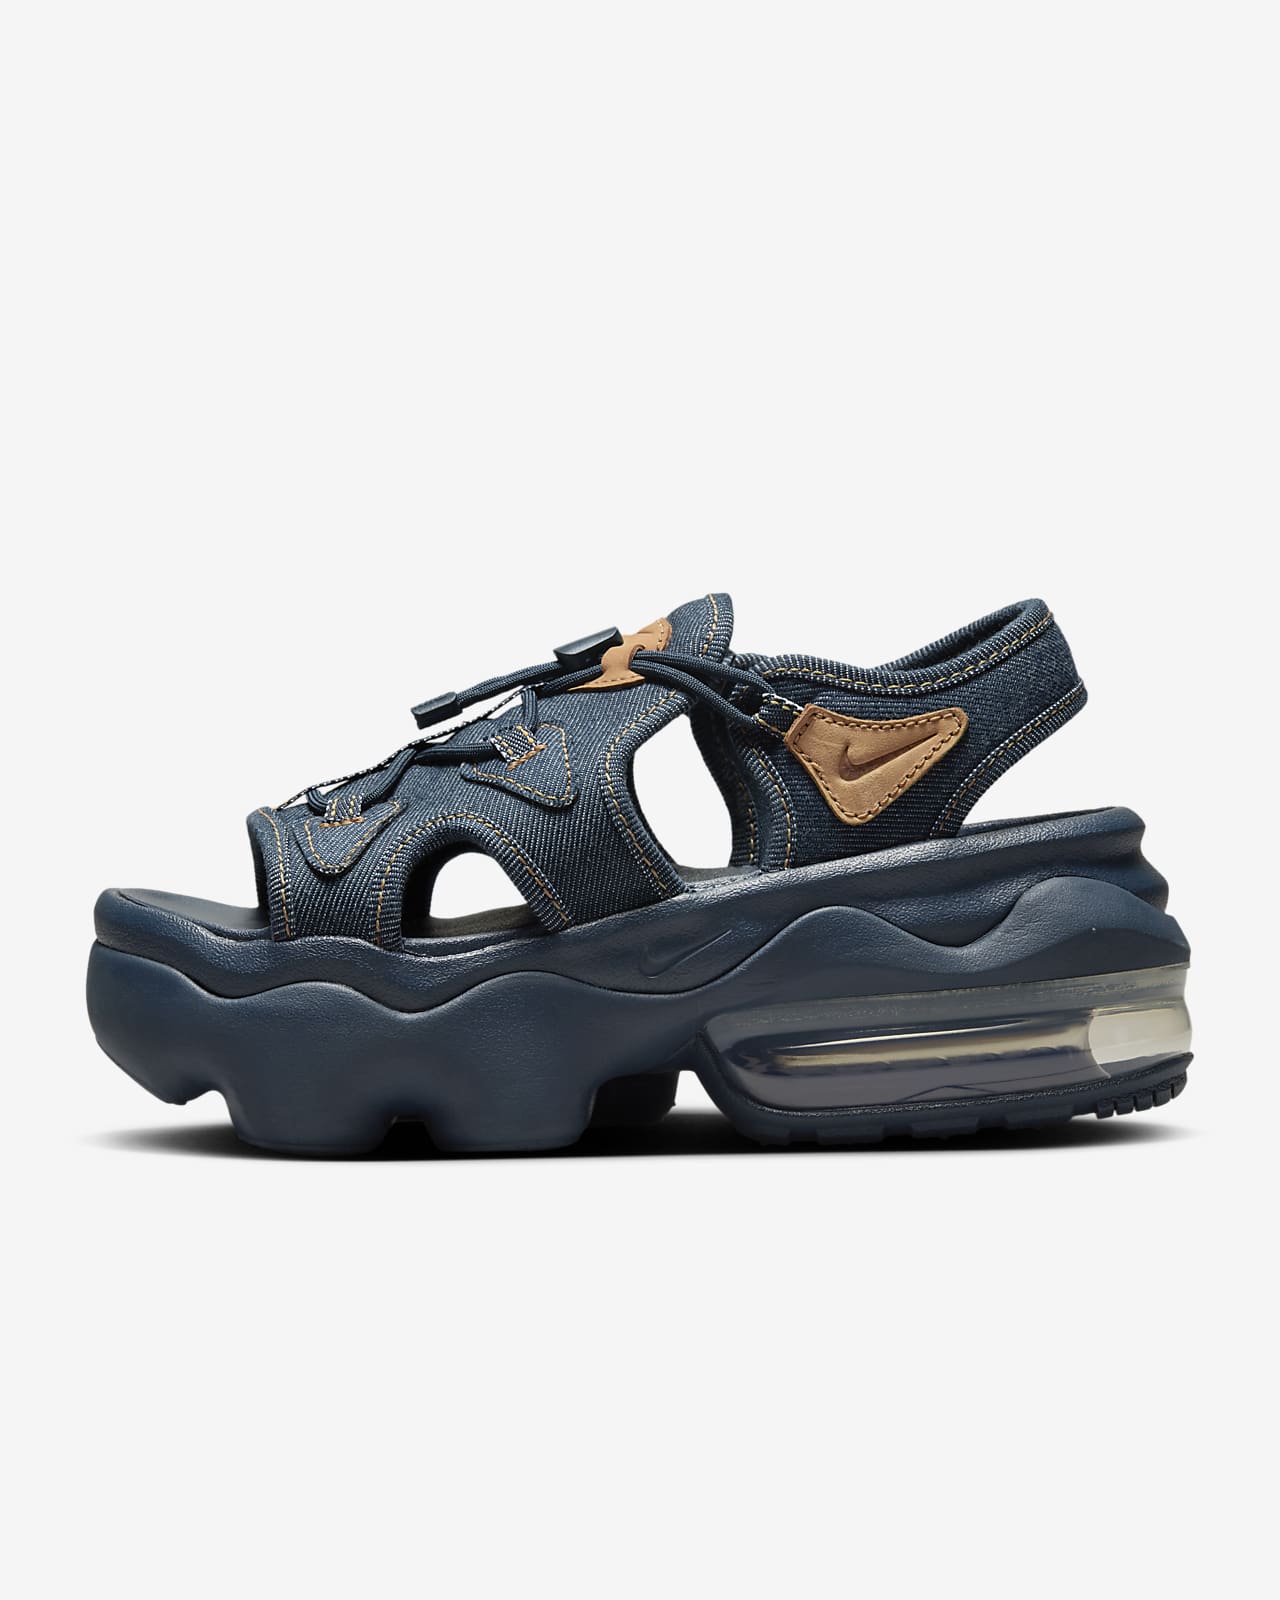 Nike Air Max Koko SE Women's Sandals